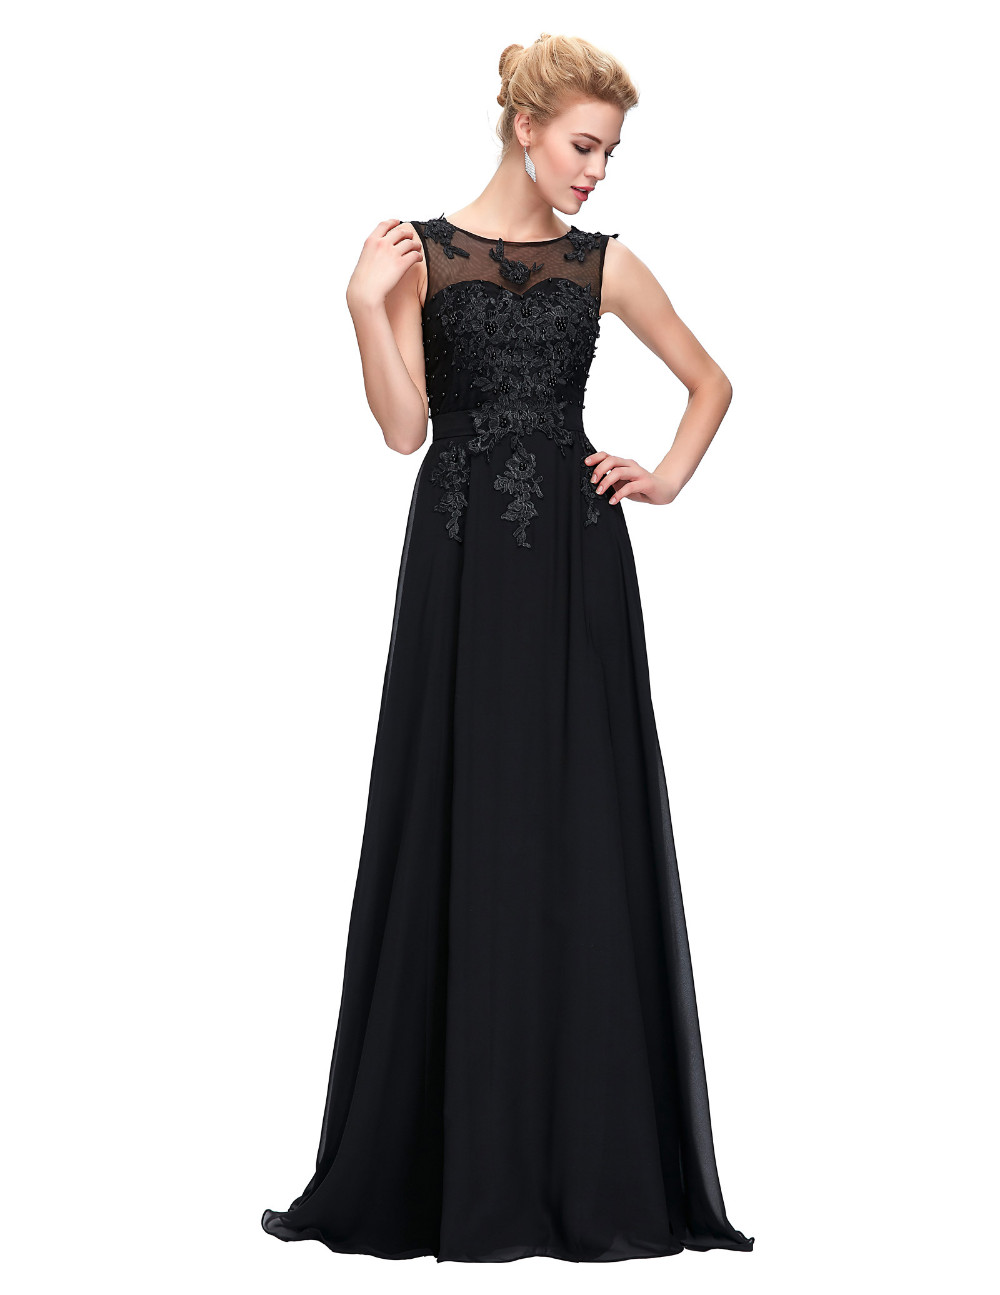 Black Illusion Chiffon Floor Length Prom Dress, Formal Gown,Evening ...